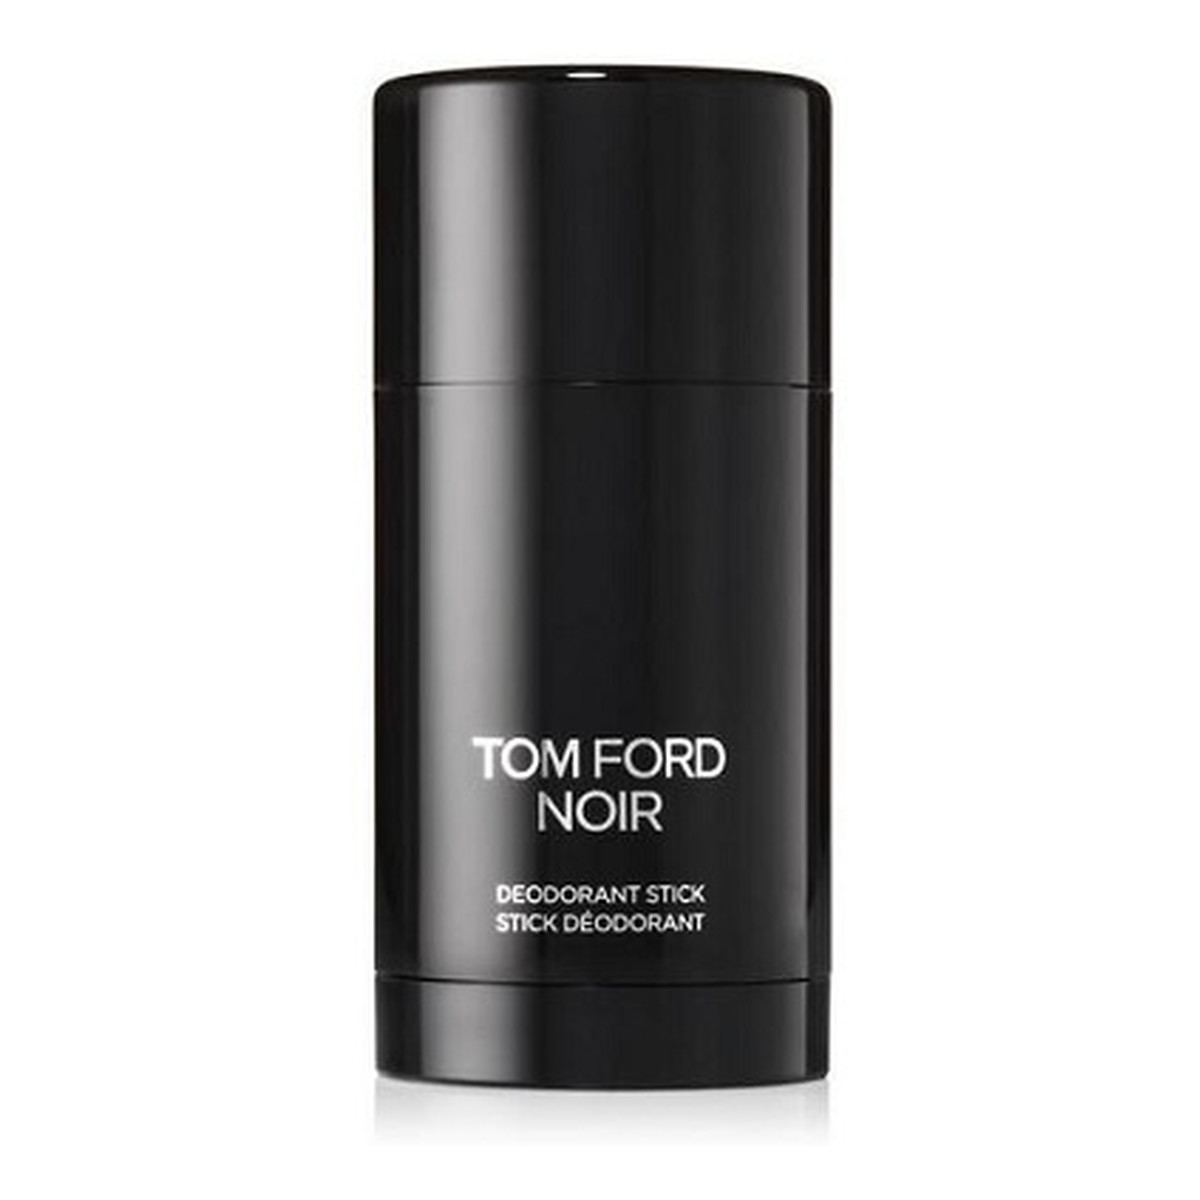 Tom Ford Noir Dezodorant sztyft 75ml